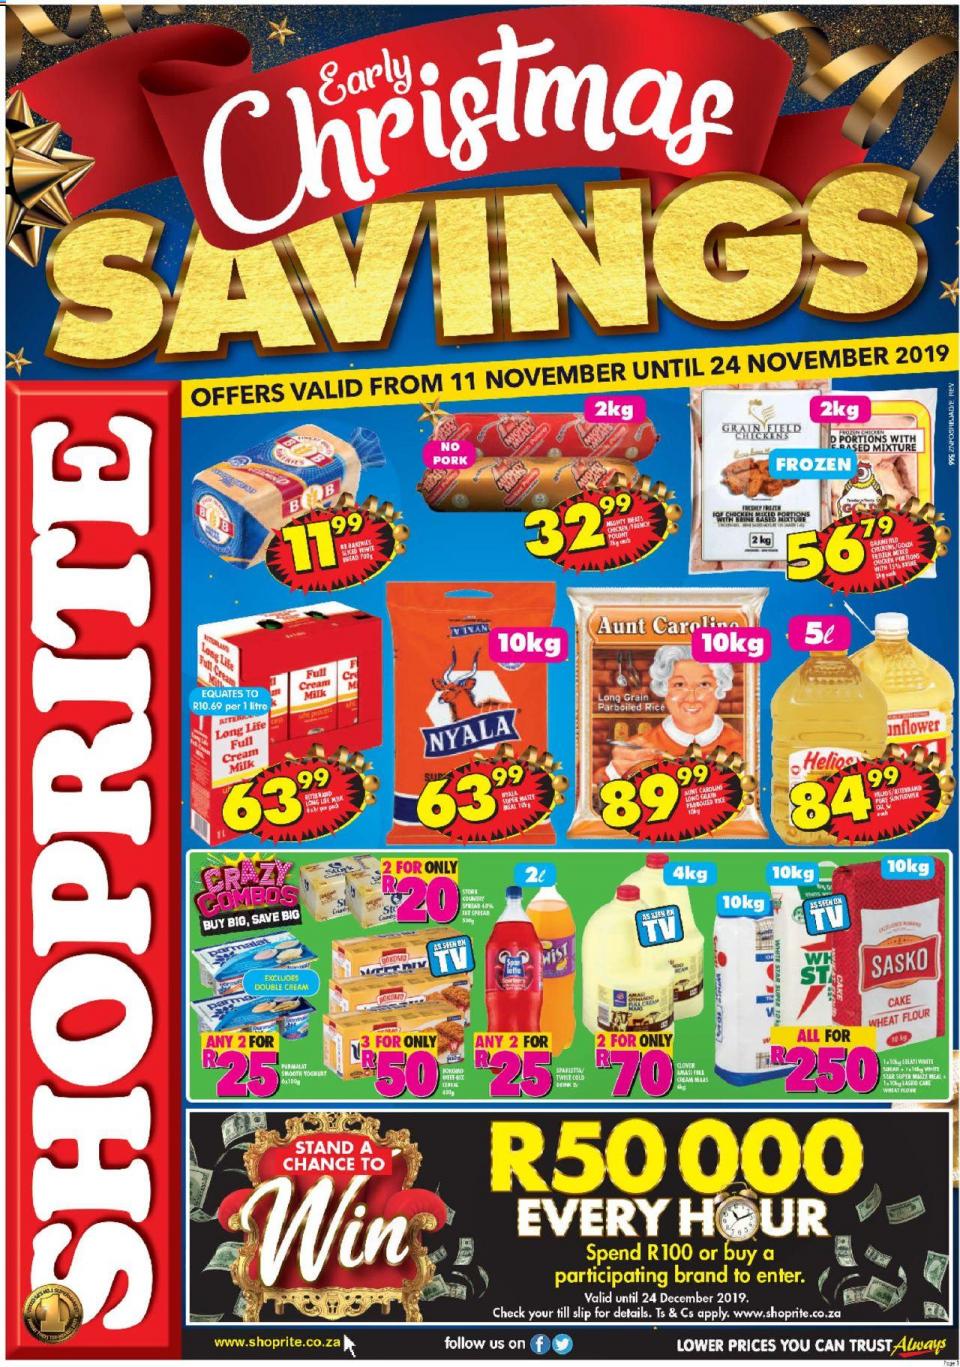 Shoprite Specials KwaZulu-Natal Early Christmas Savings 11 November 2019